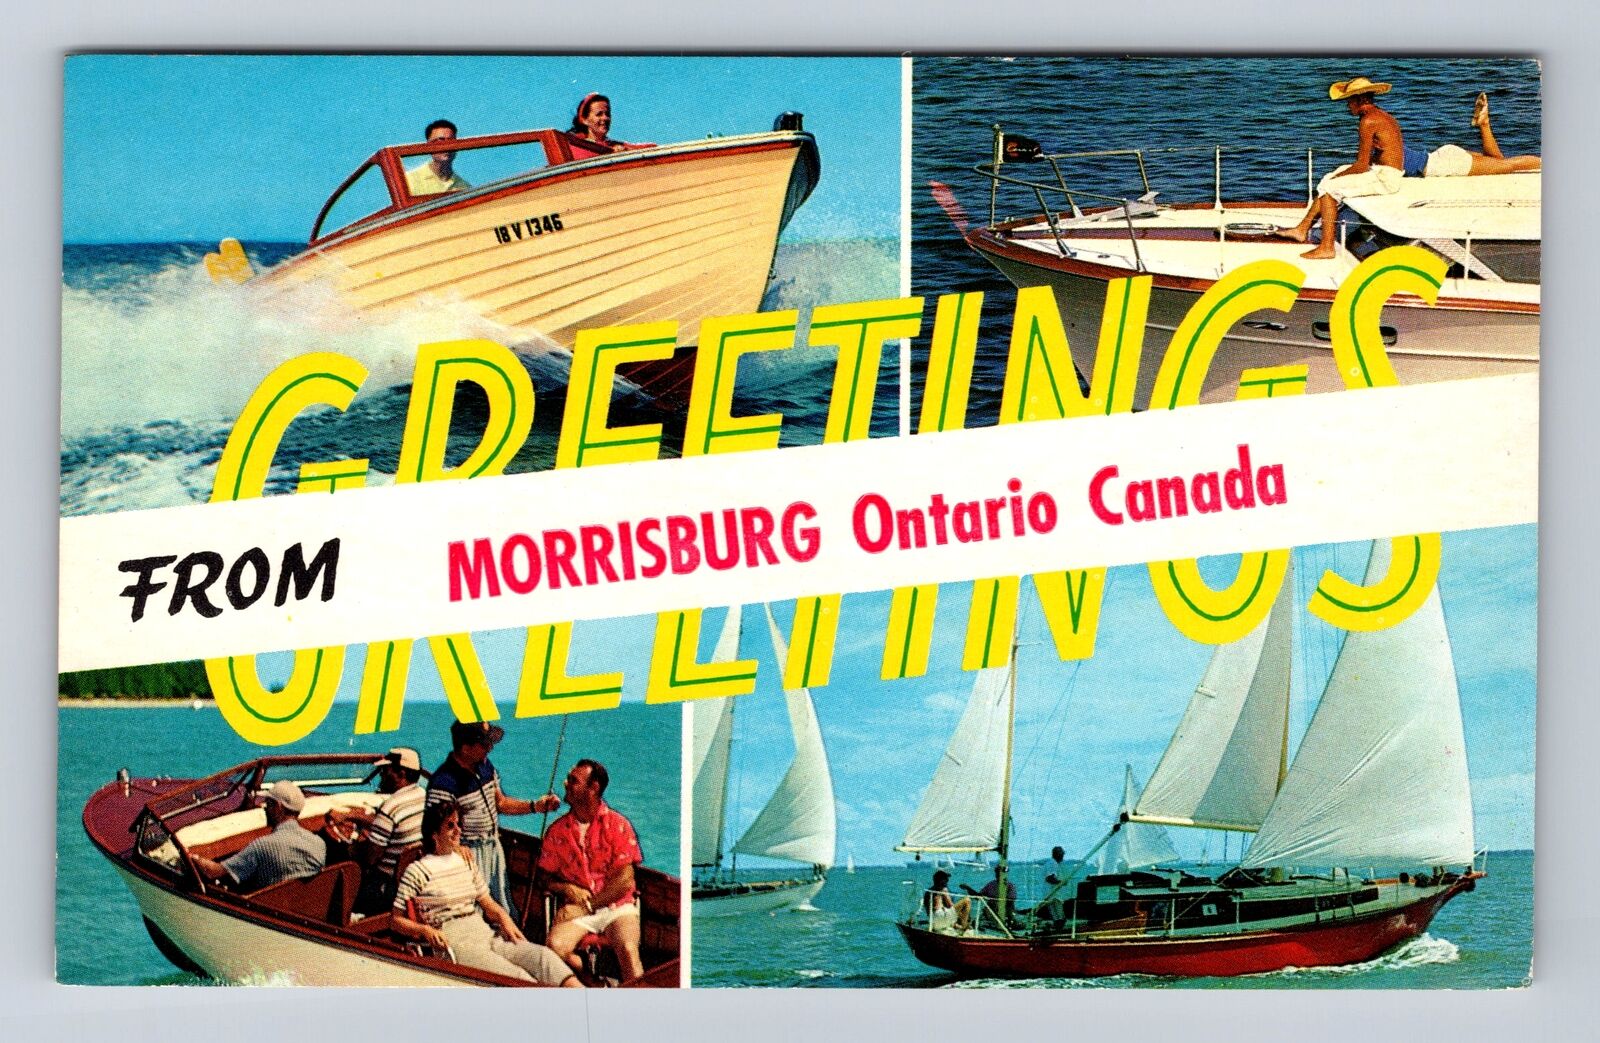 Morrisburg Ontario-Canada, General Banner Greeting, Boating, Vintage Postcard